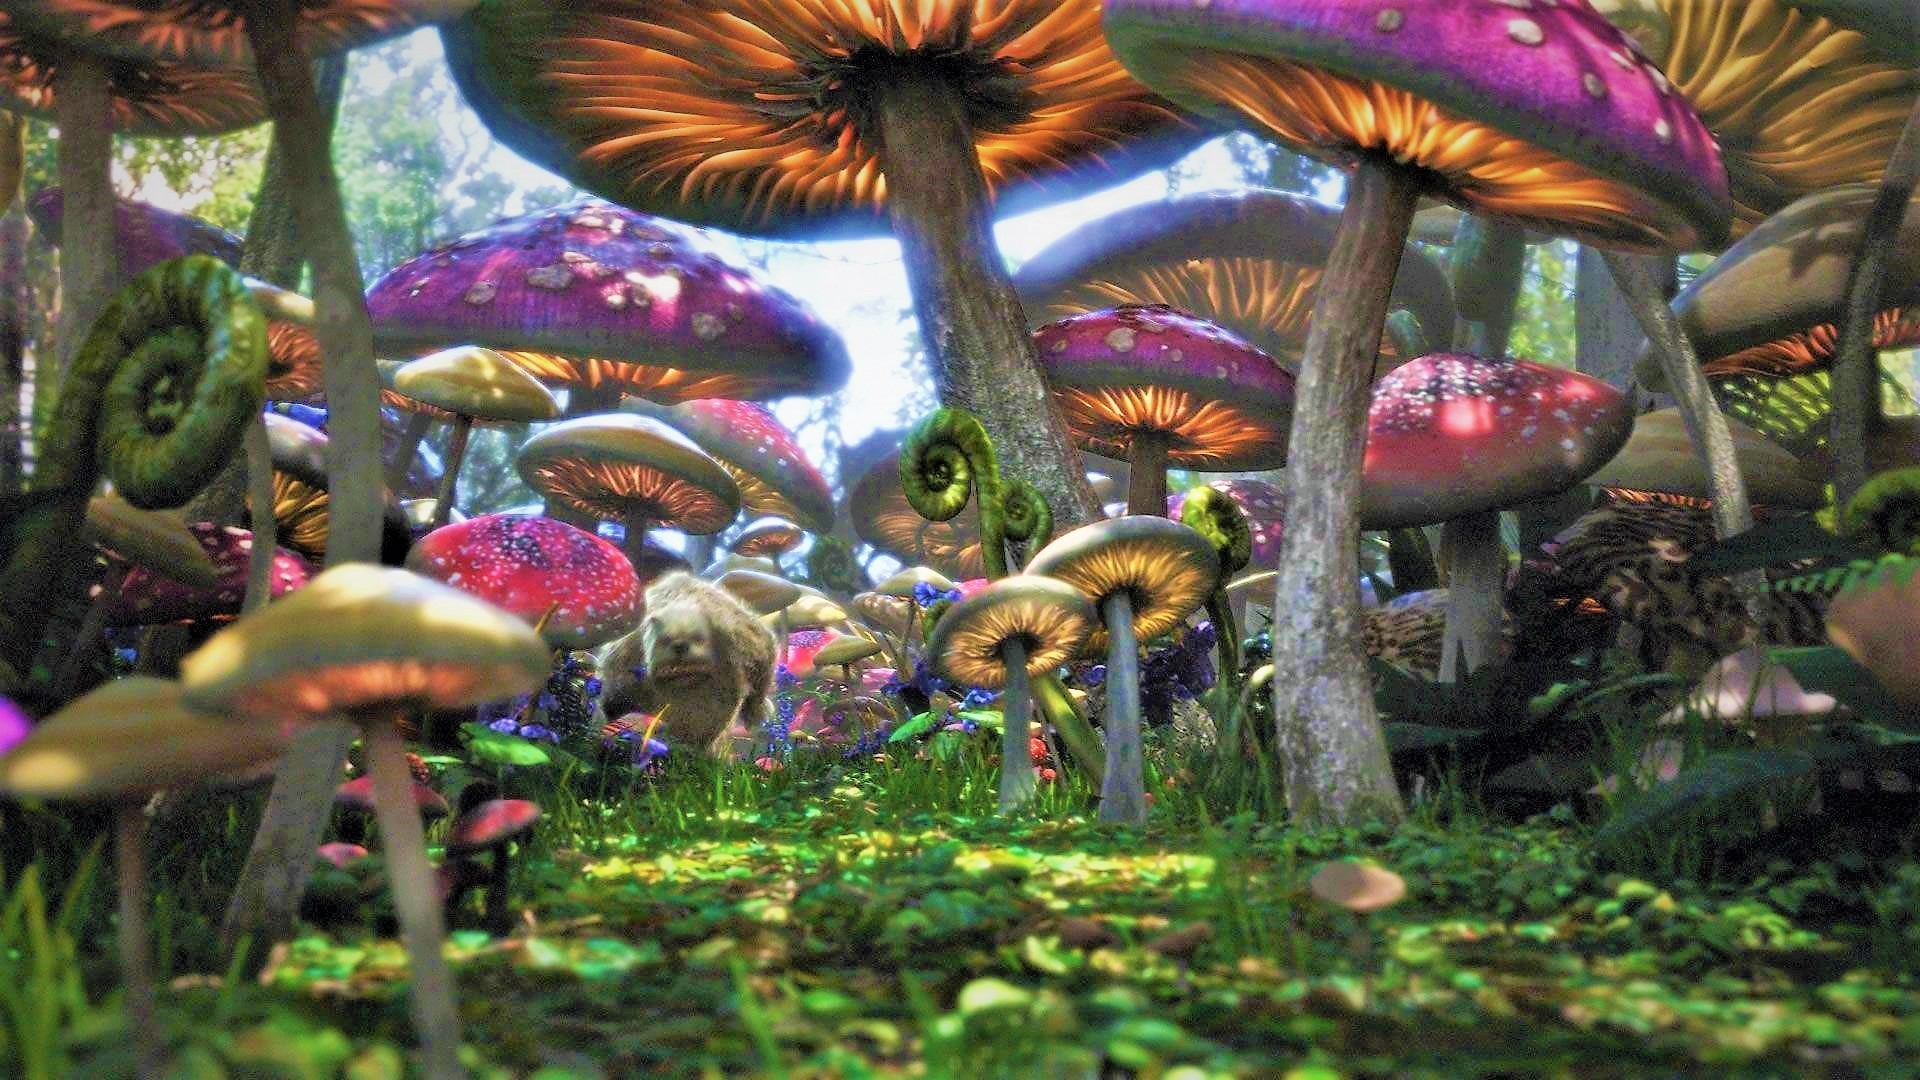 Mushroom Forest from "Alice in Wonderland"